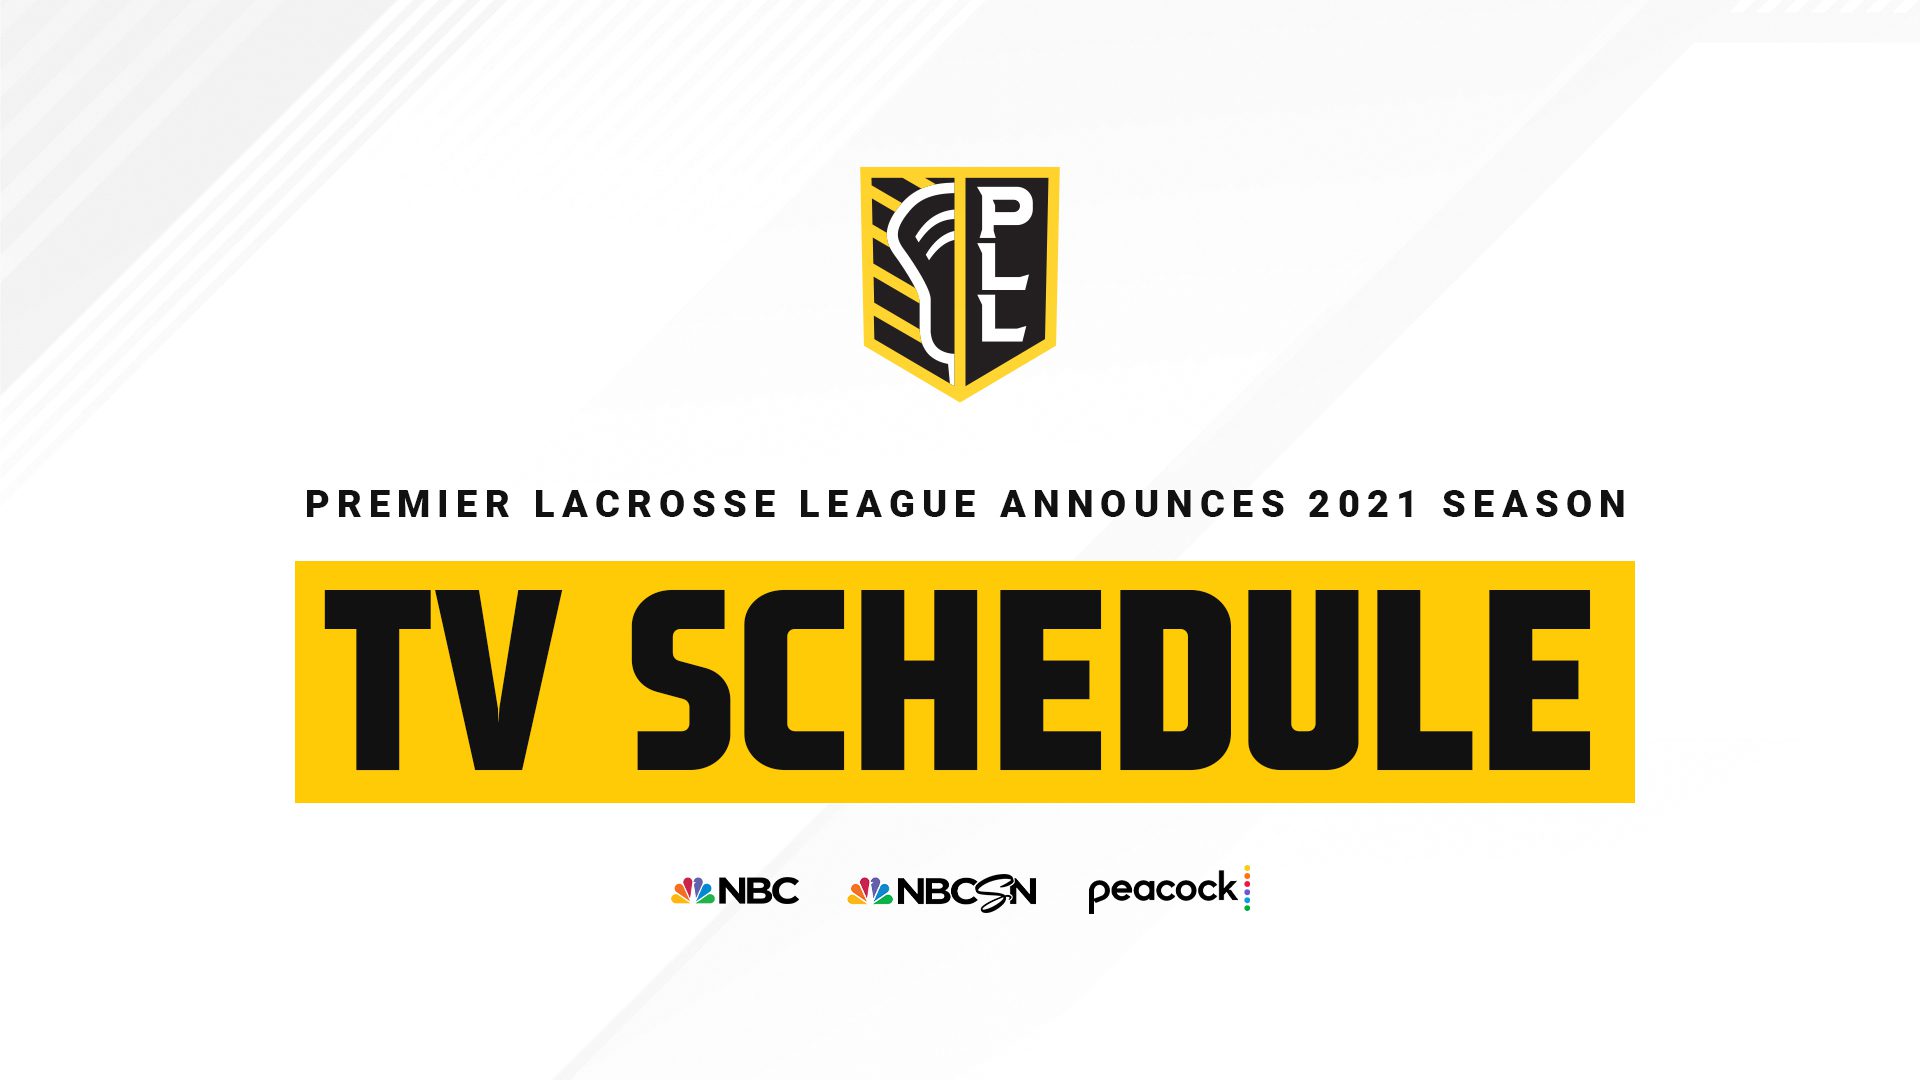 NBC Sports And Peacock Announce 2021 Premier Lacrosse League Media Schedule 